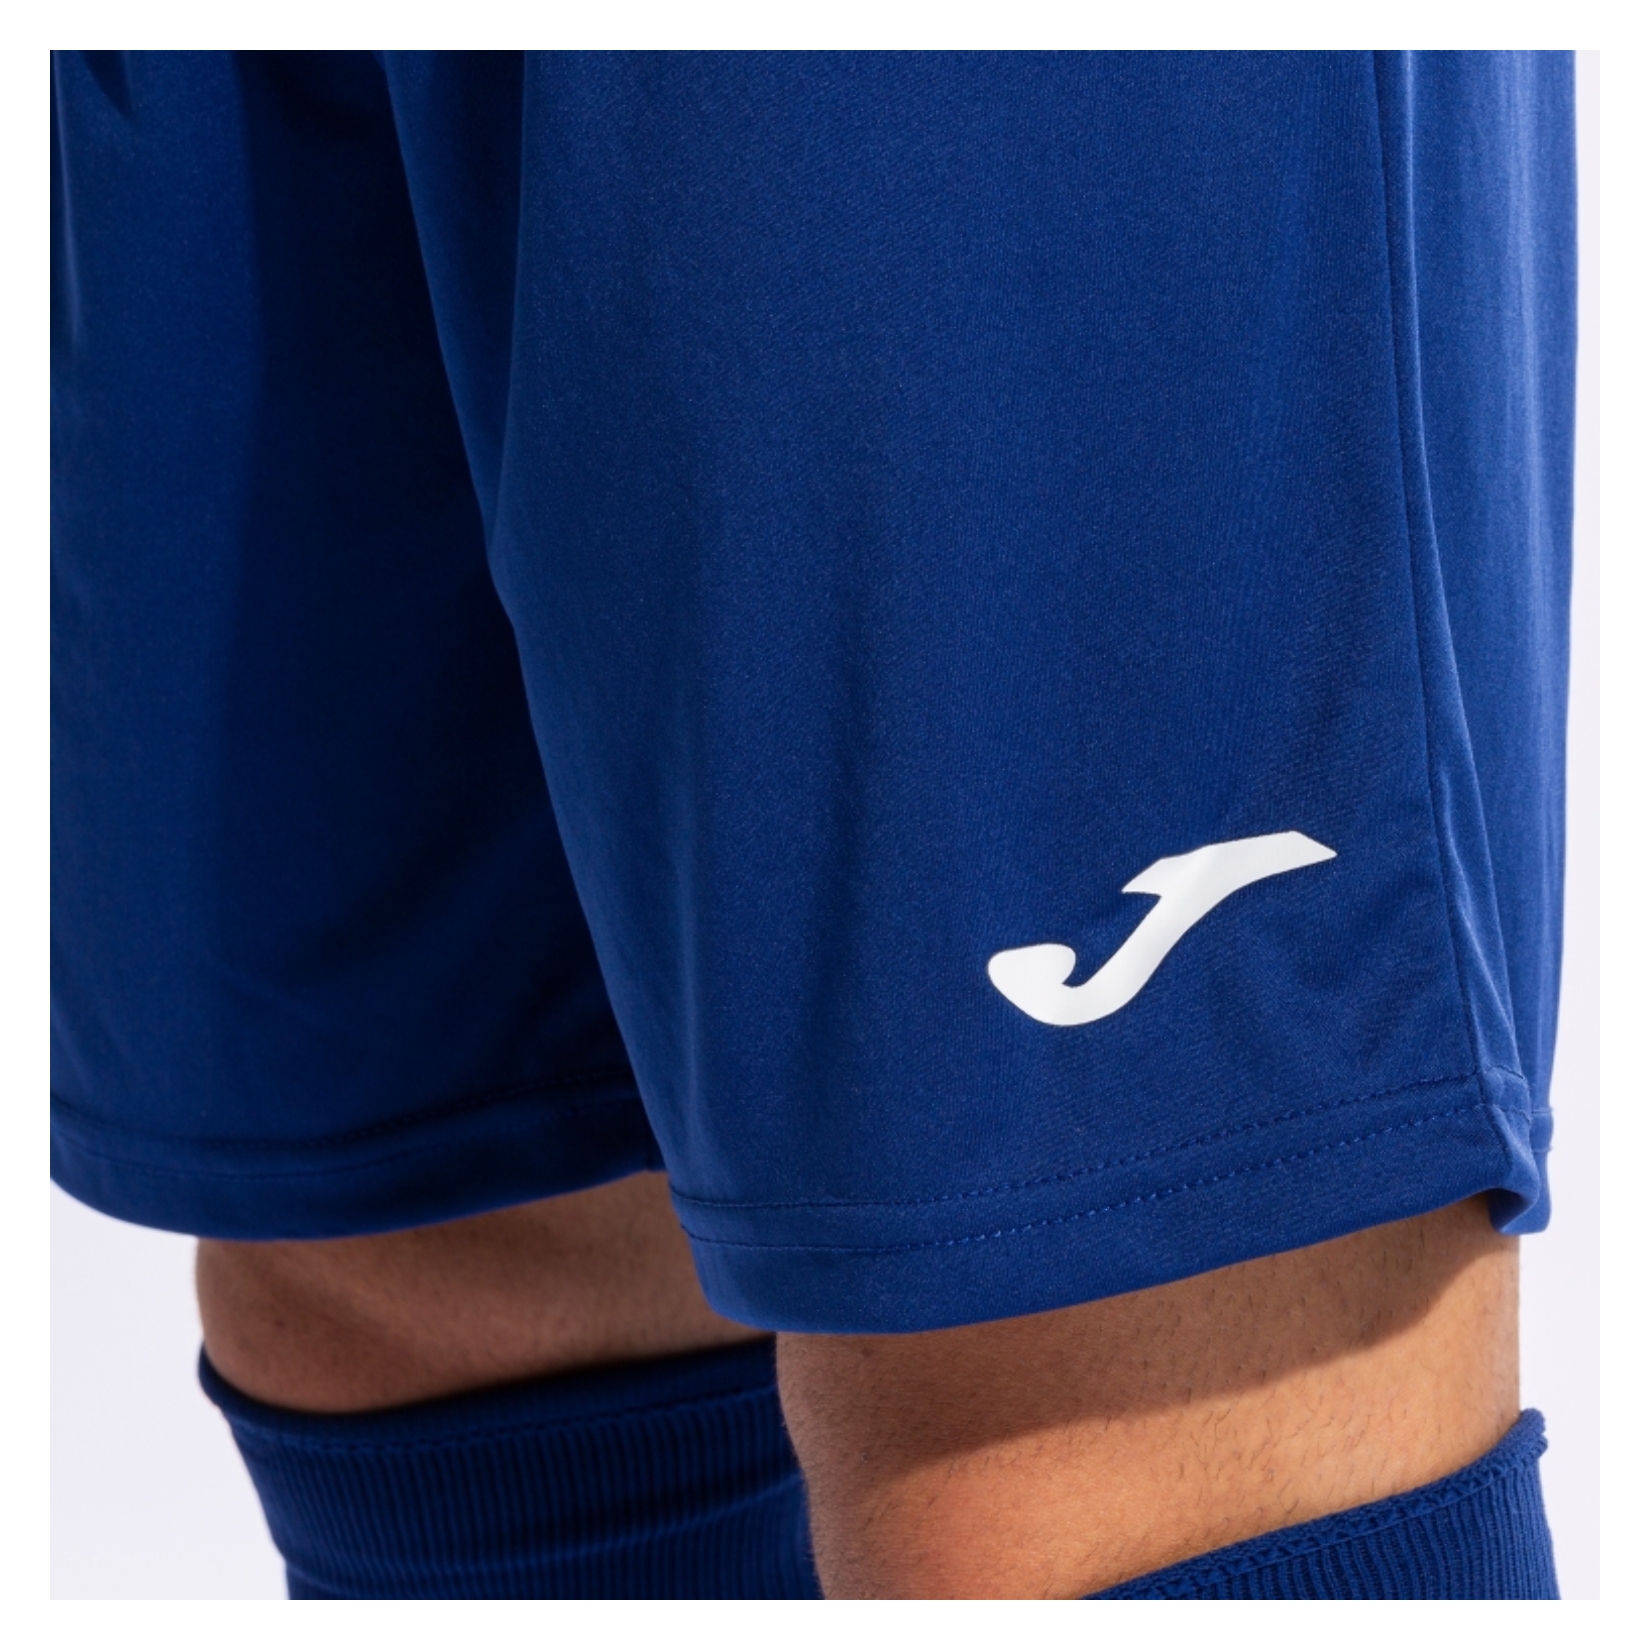 Joma Inter Classic Long Sleeved Kit, Shorts & Socks Set